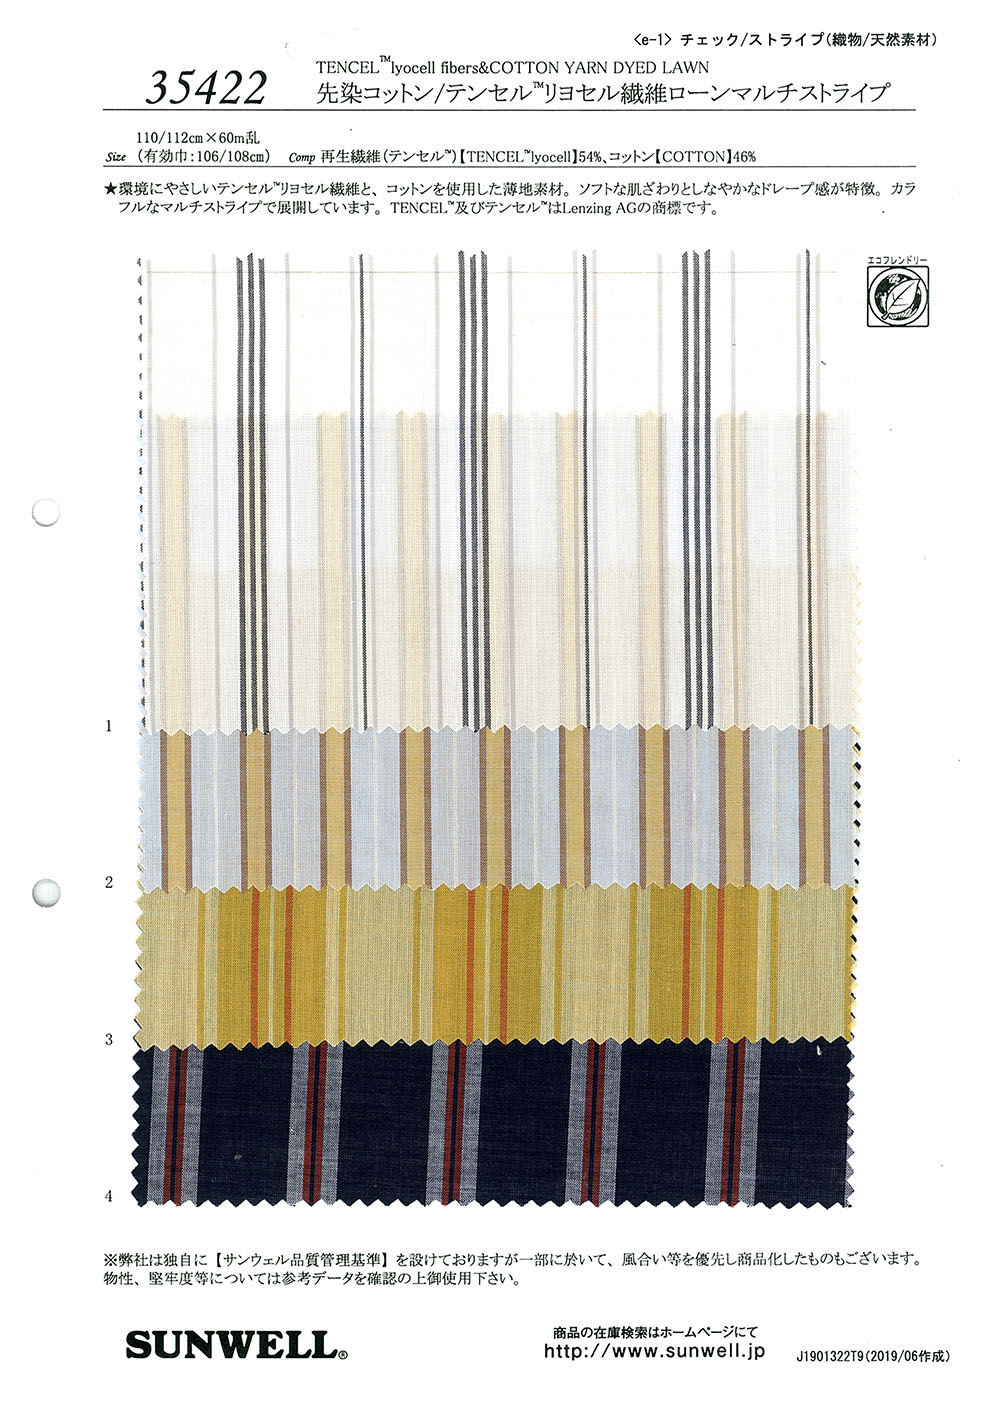 35422 Algodón Teñido En Hilo / Tencel (TM) Lyocell Fiber Lawn Multi-stripes[Fabrica Textil] SUNWELL